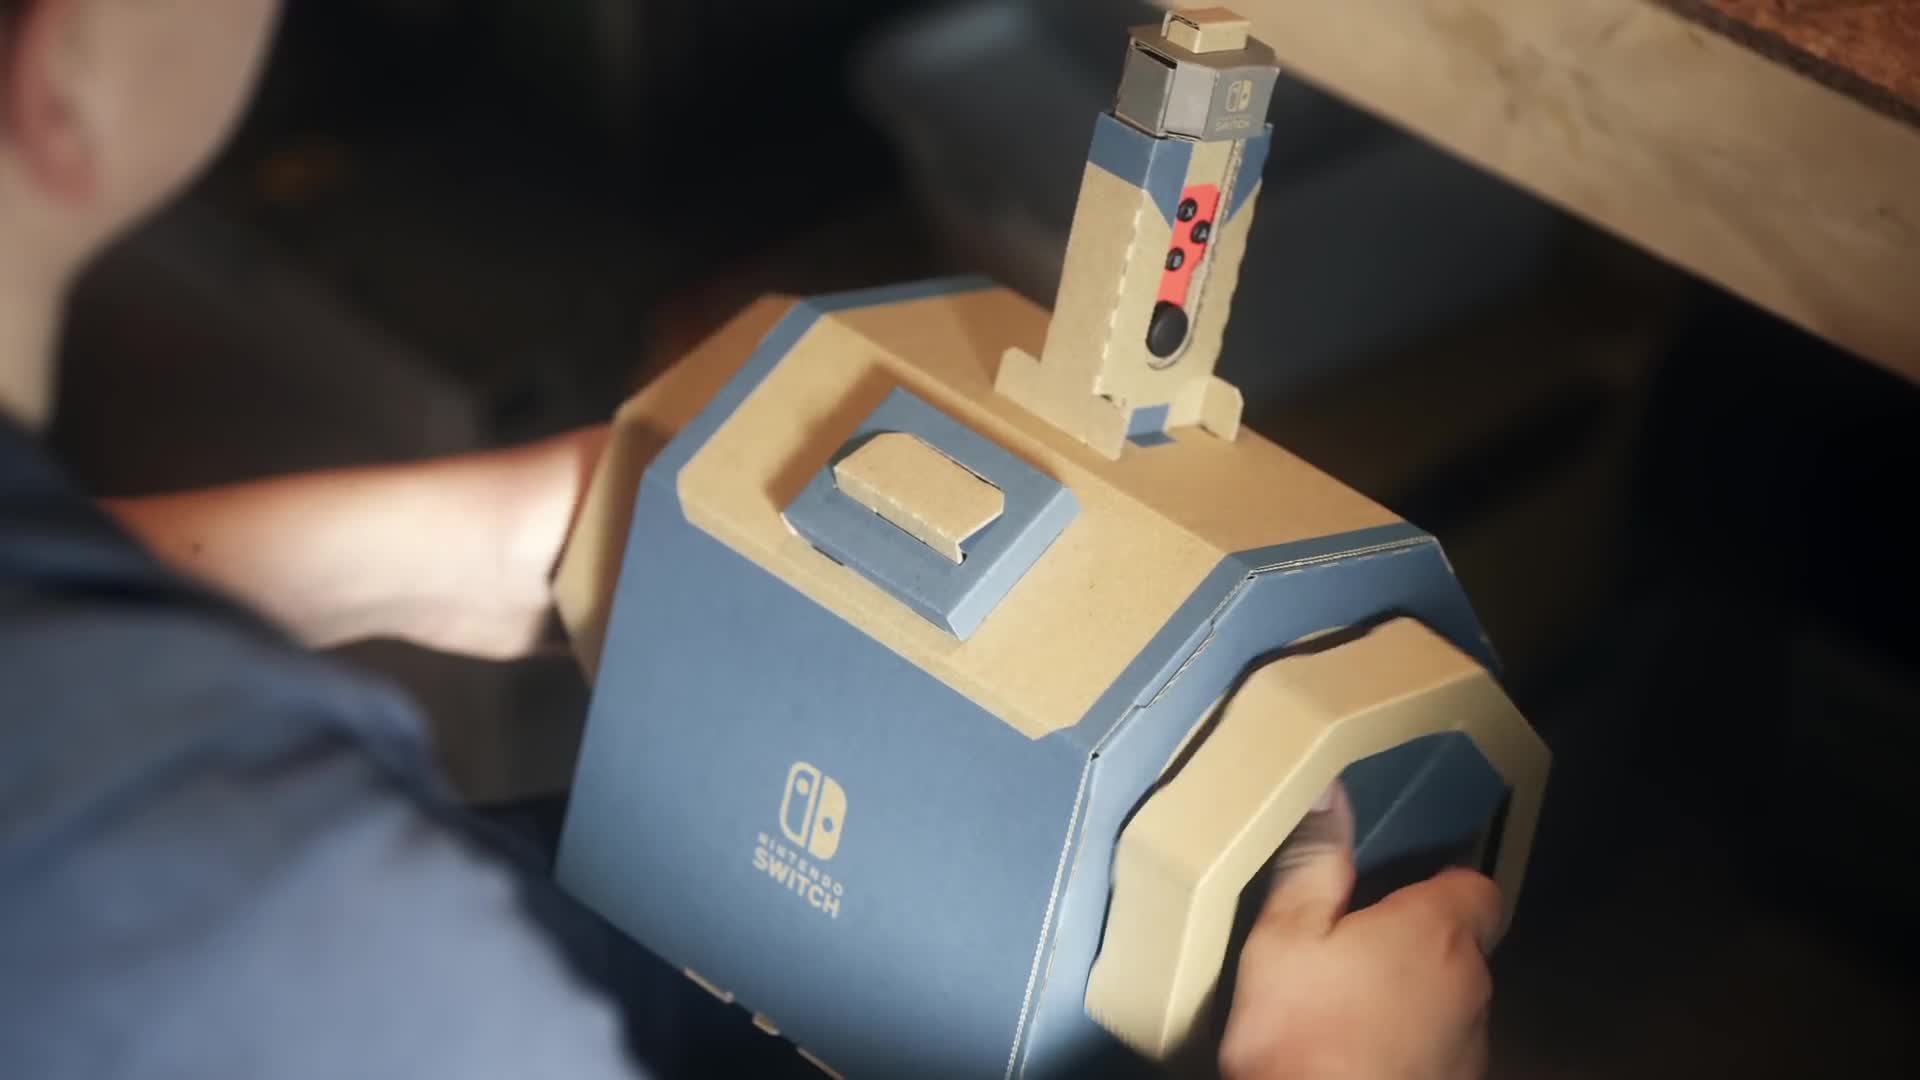 Nintendo Labo ponka prv pohad na Vehicle Kit